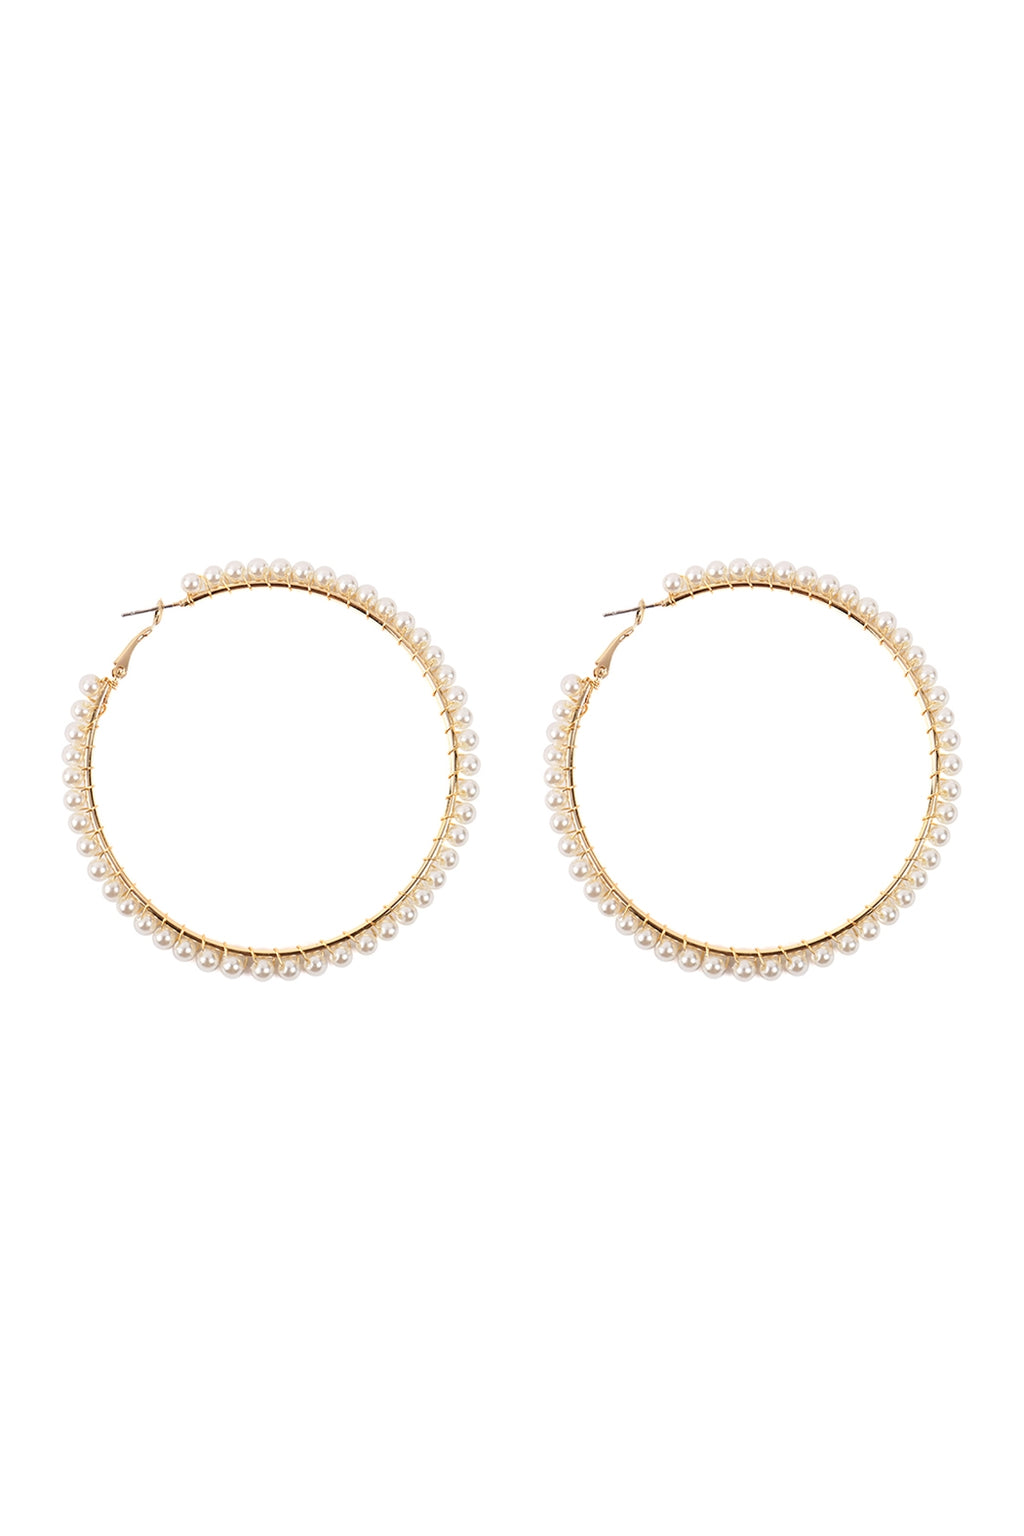 3" Hoop Pearl Wired Earrings White Gold - Pack of 6